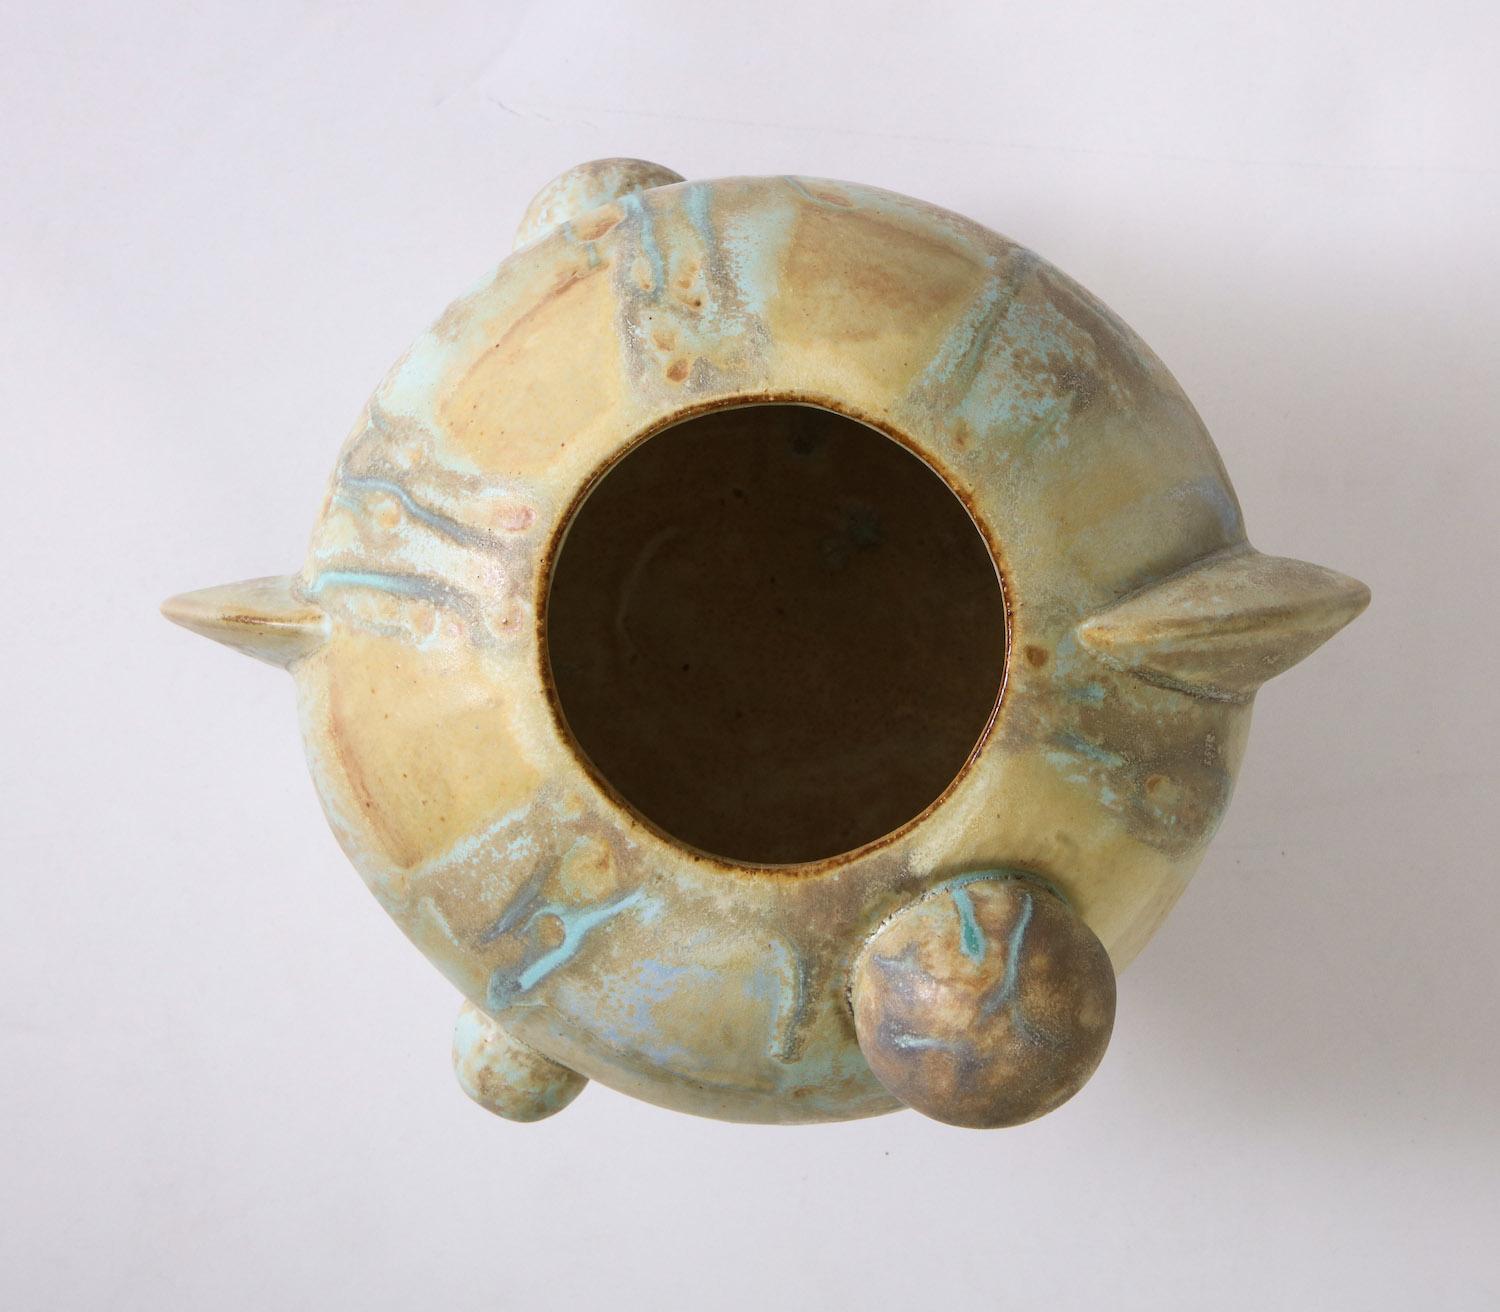 Small Orb Vase #2 by Robbie Heidinger 2